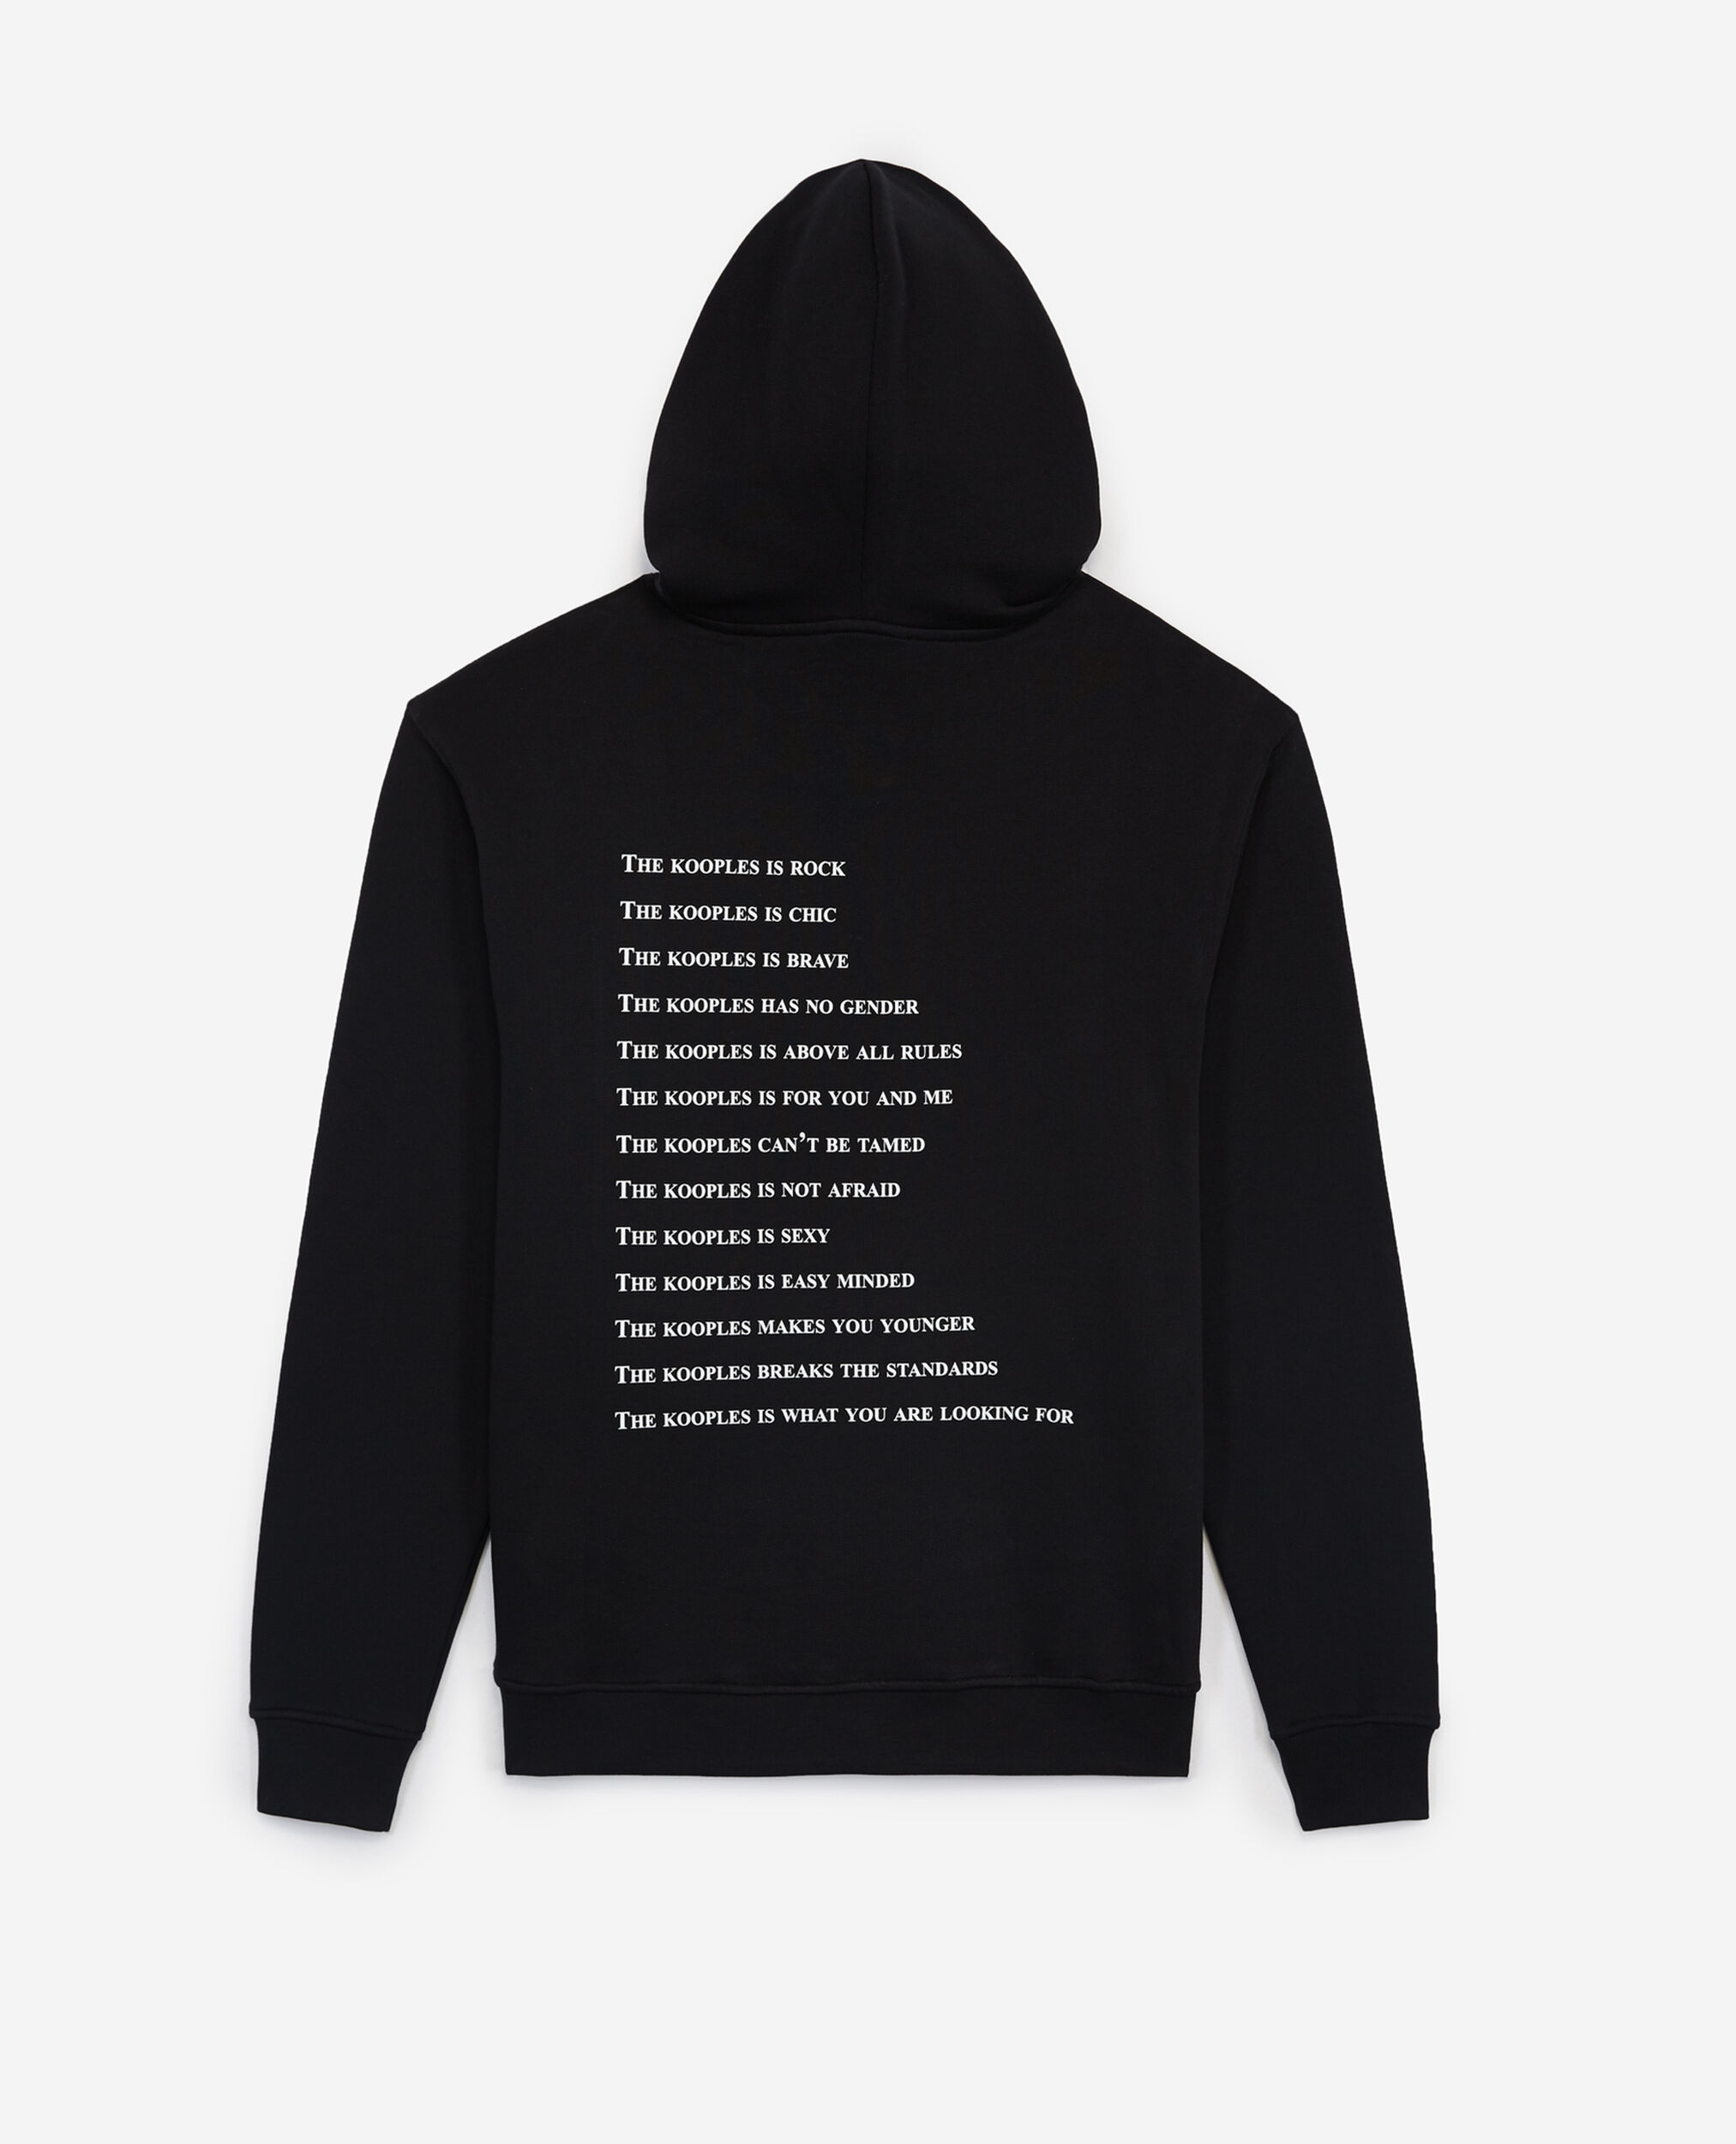 Black sweatshirt with What is screen print, BLACK, hi-res image number null